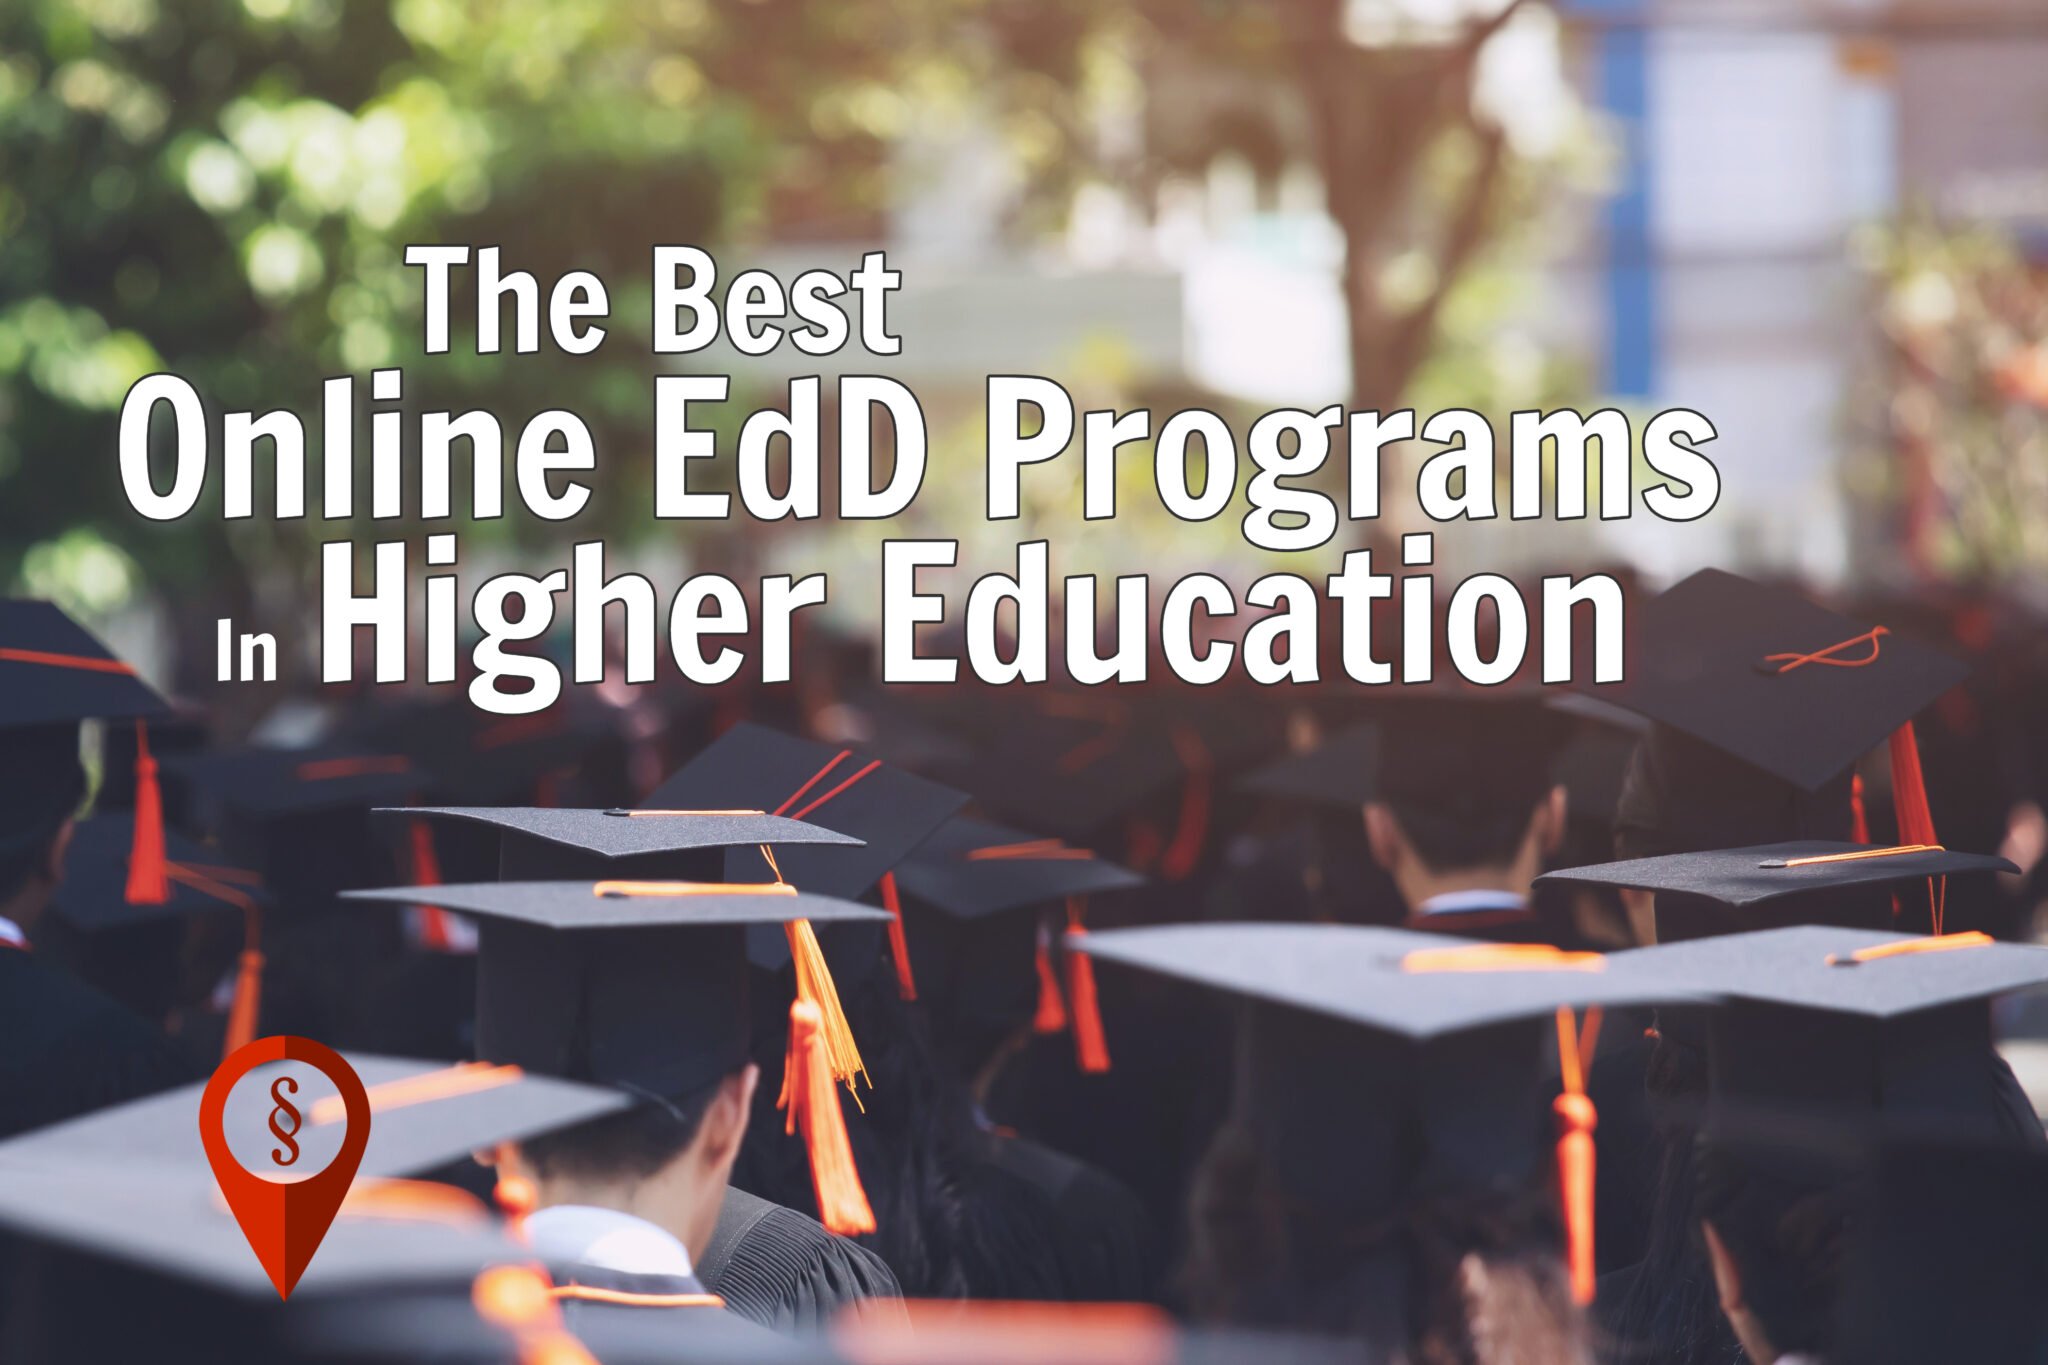 online ed d programs without dissertation